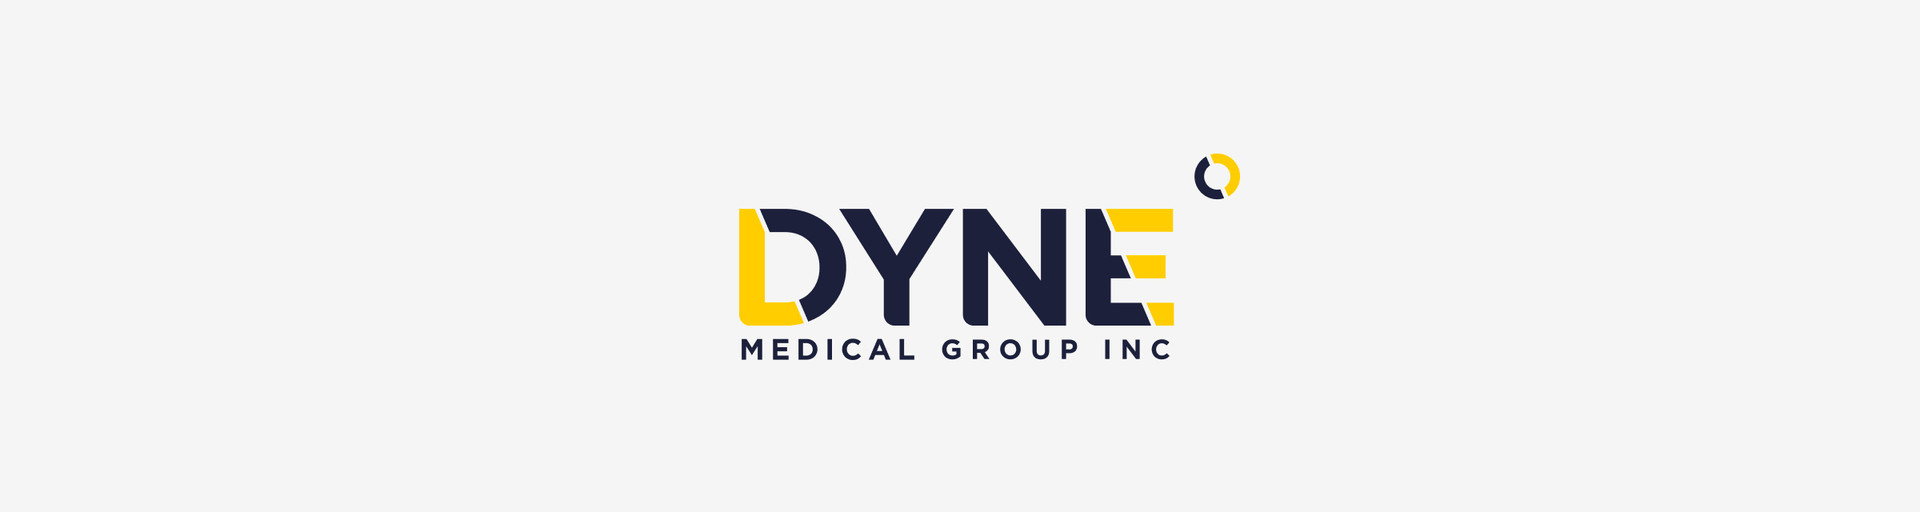 DYNE MEDICAL GROUP INC logo